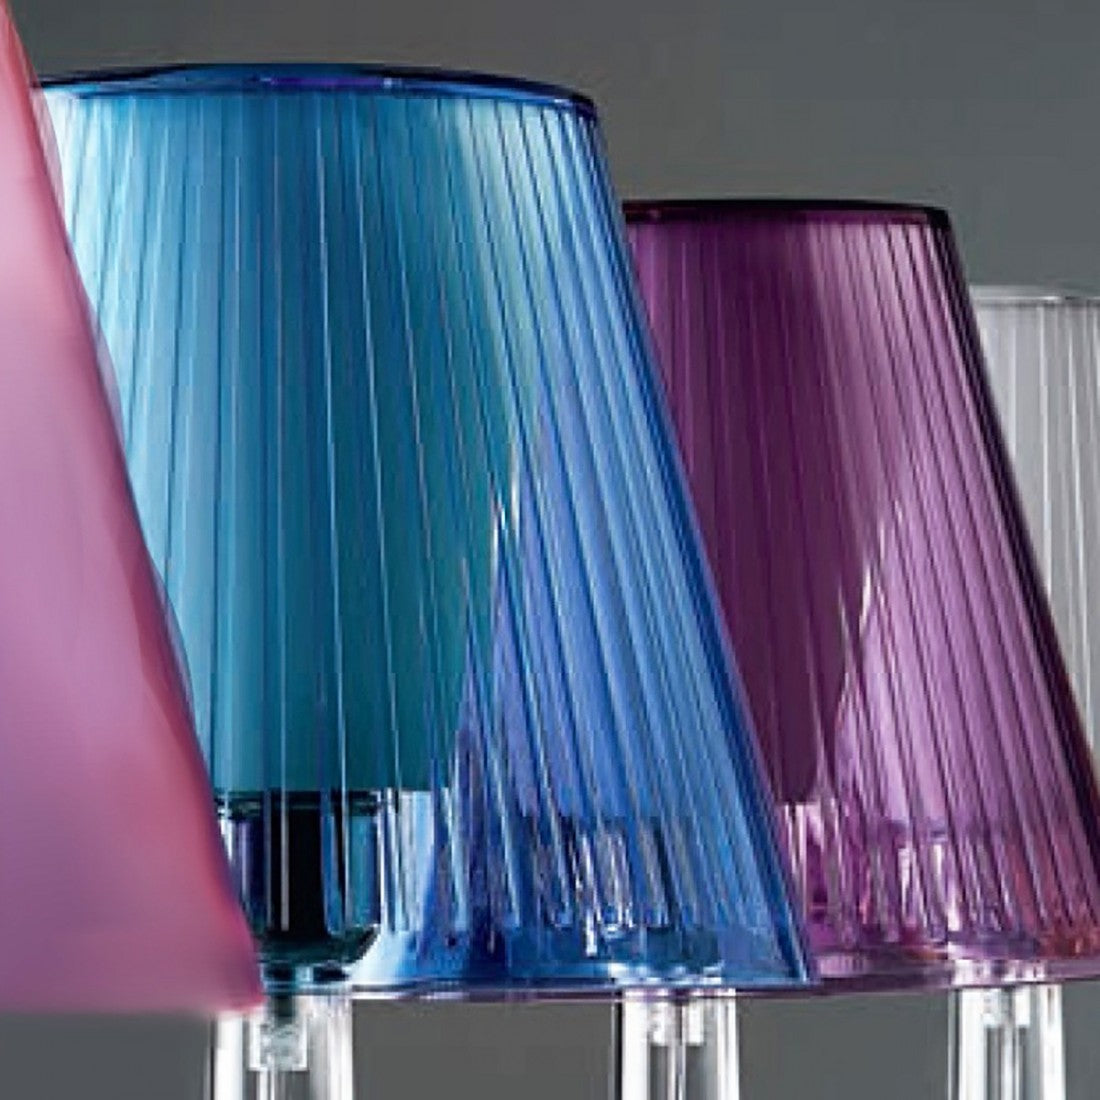 Abat-jour illuminando jolly p e27 led lampada tavolo moderna elegante colorata acrilico, colore celeste